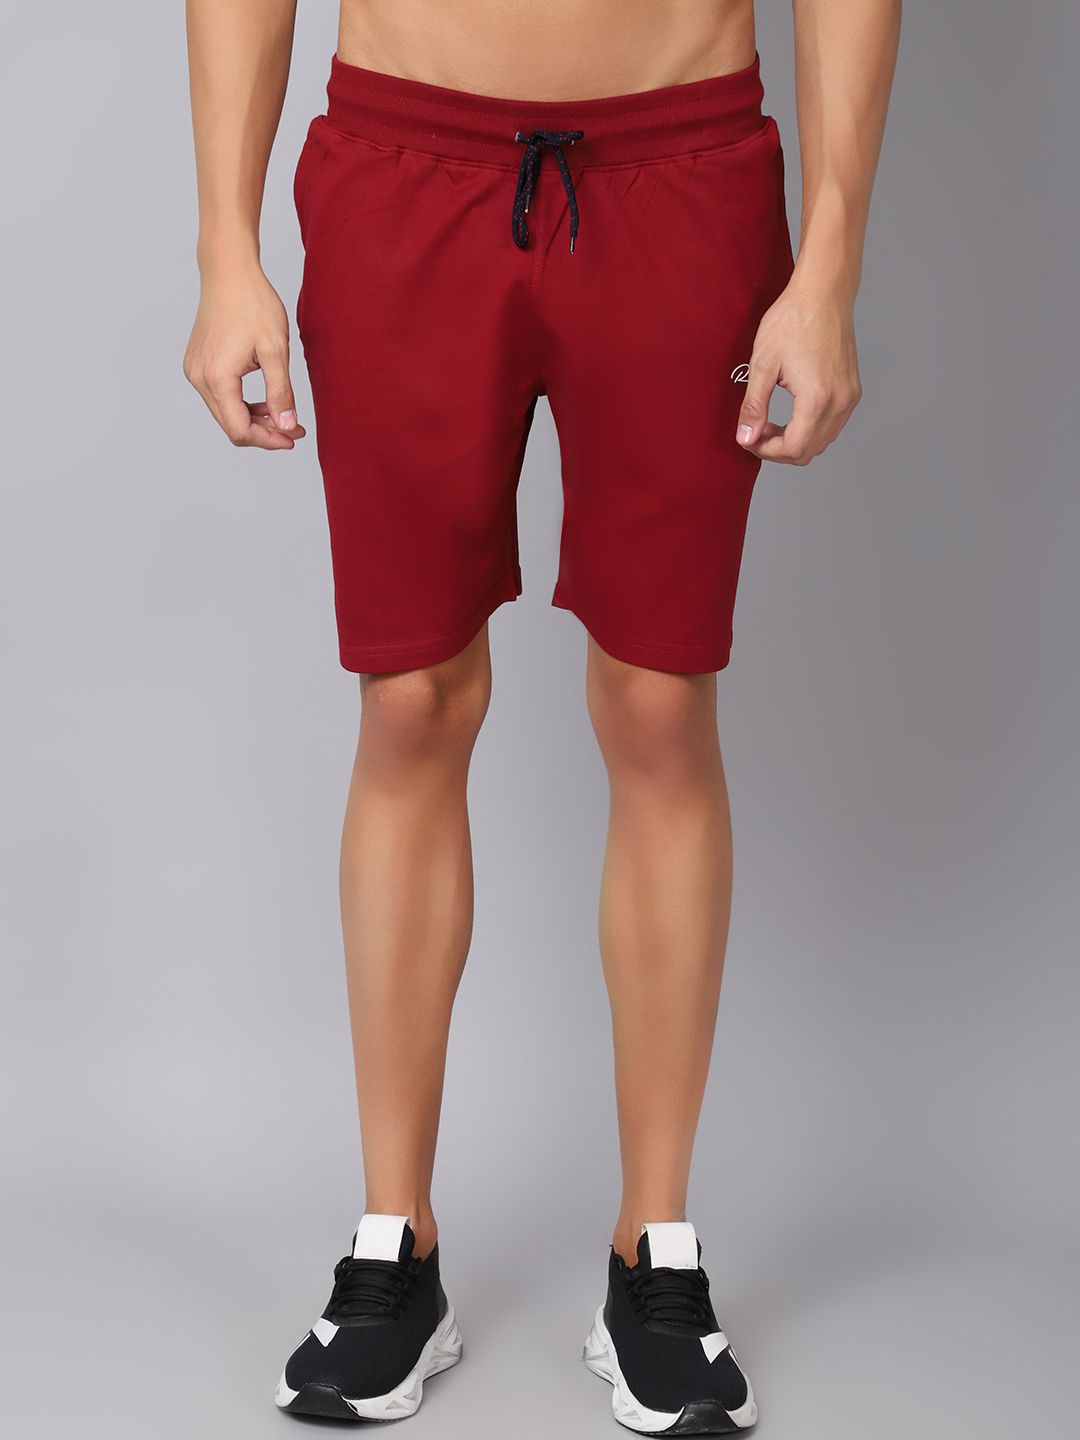     			Rodamo Maroon Cotton Men's Chino Shorts ( Pack of 1 )